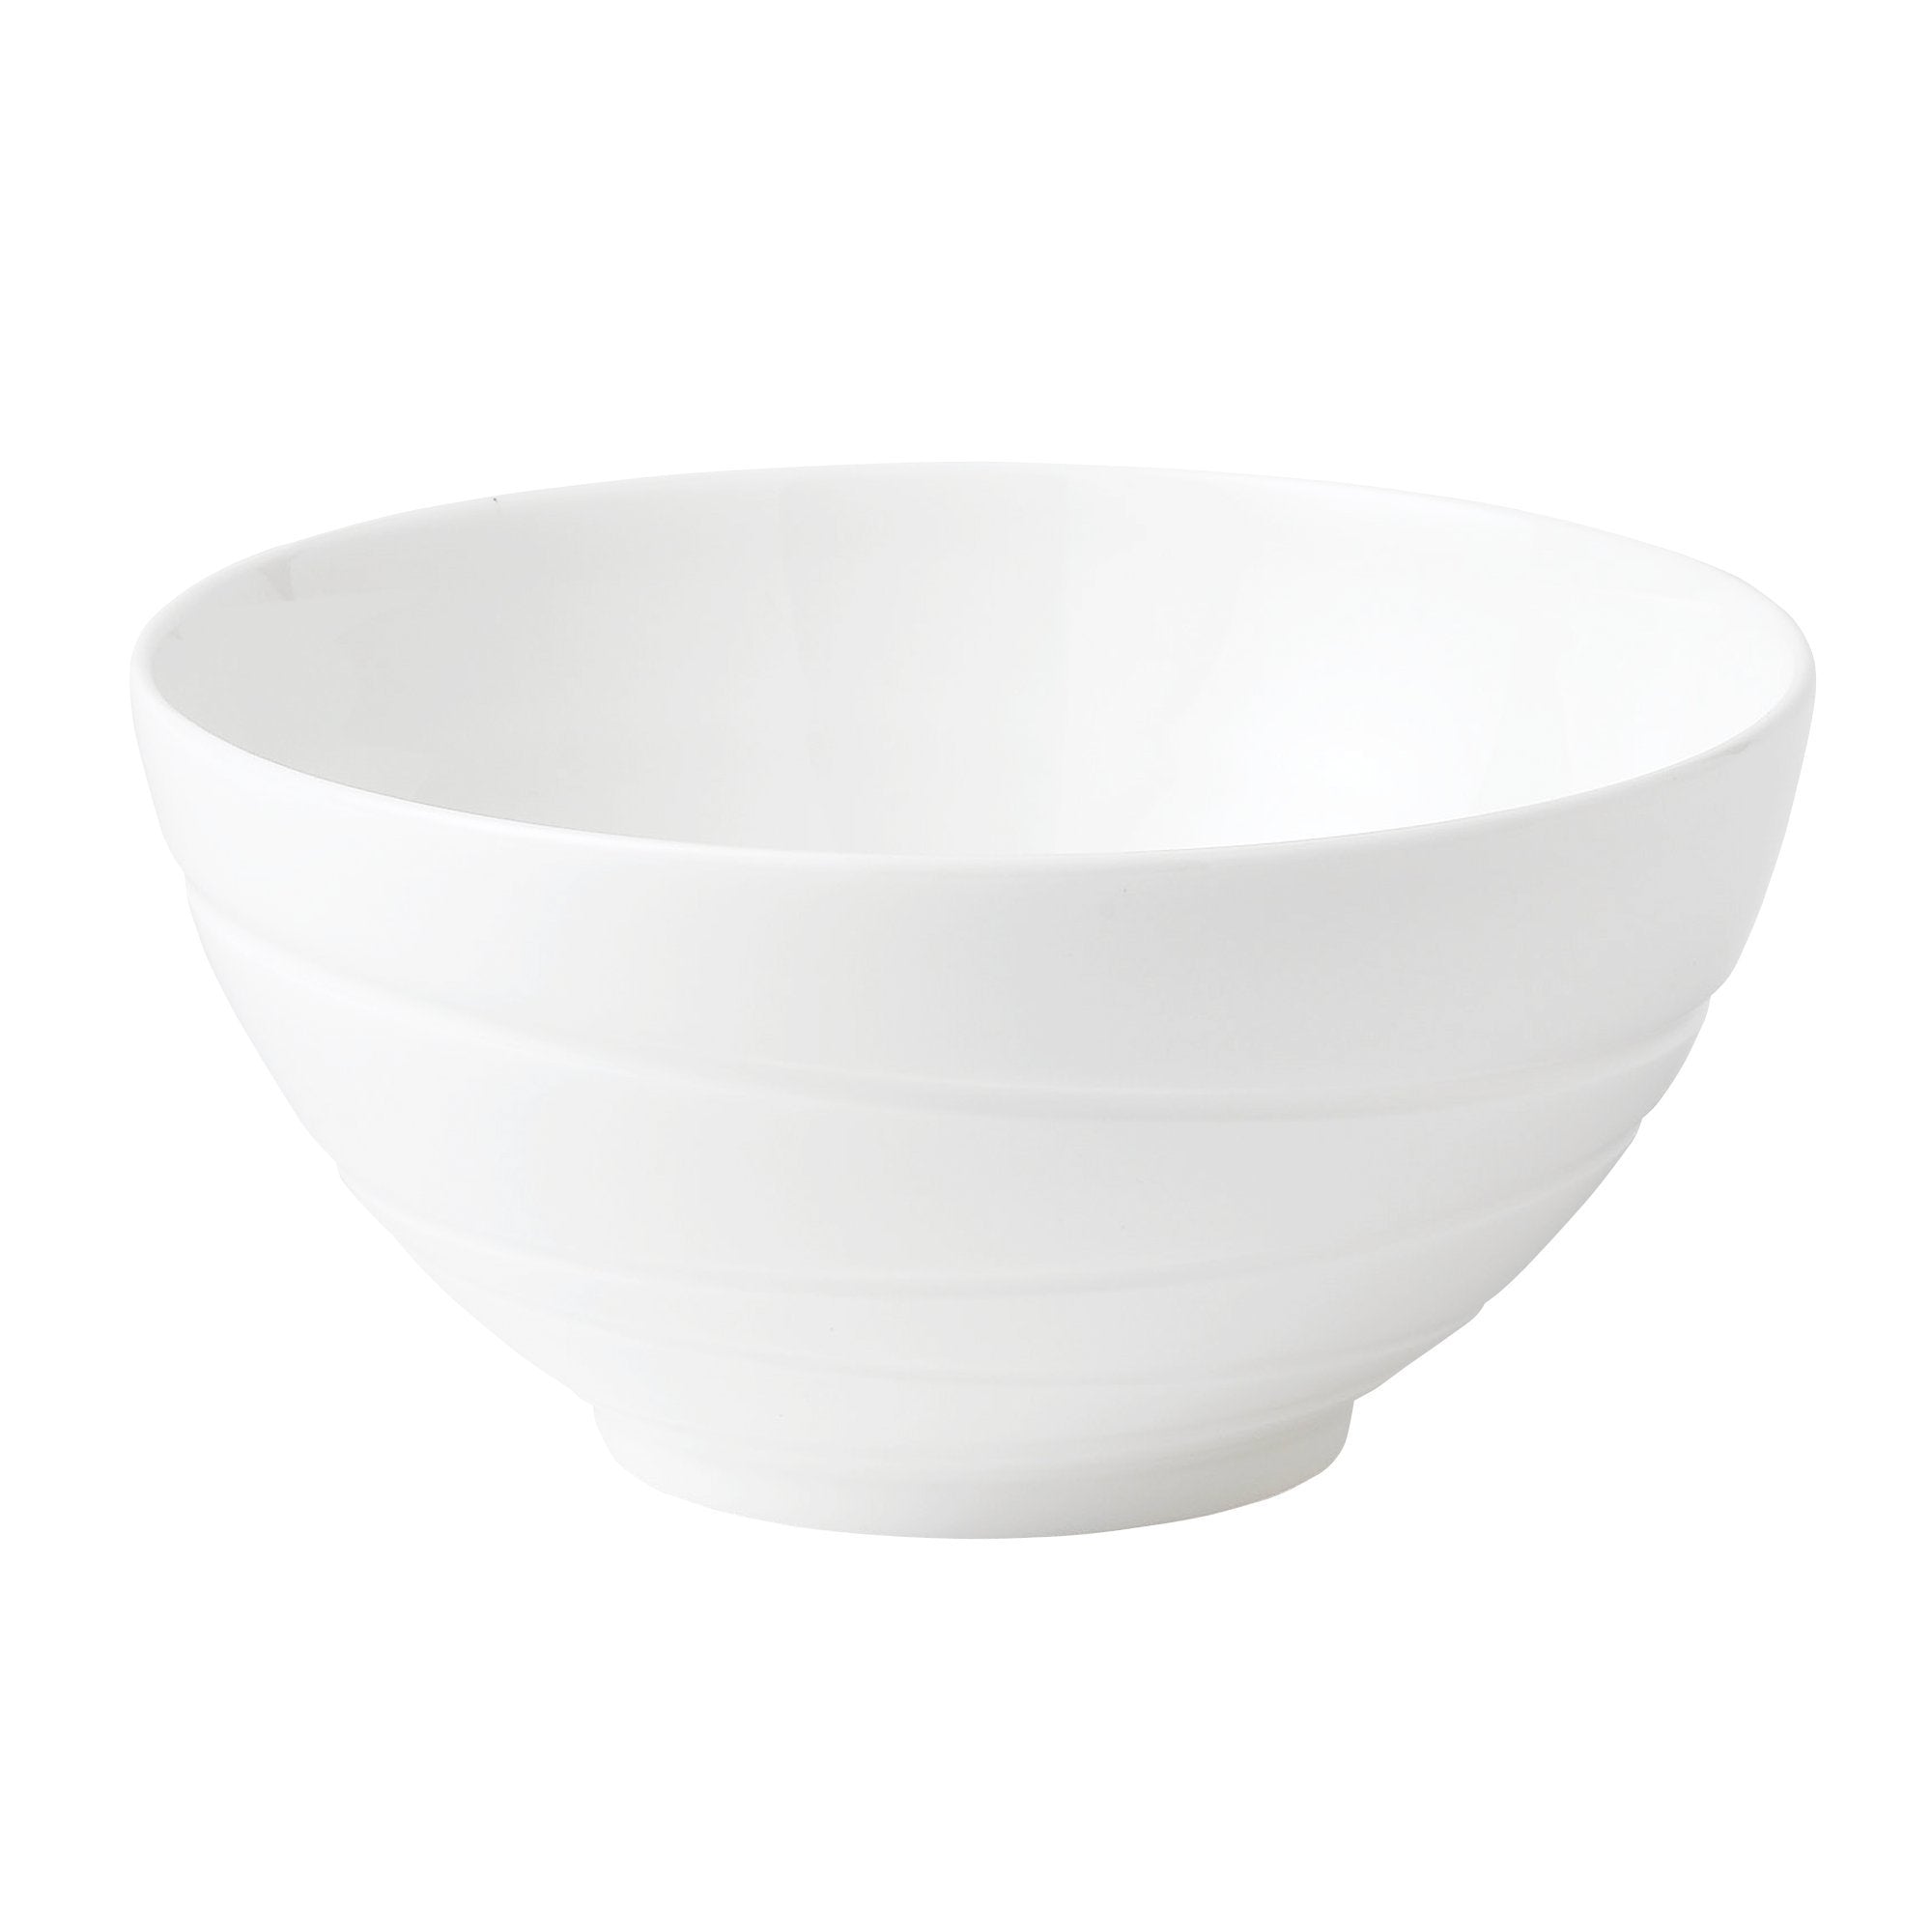 Jasper Conran by Wedgwood White Bone China Gift Bowl Swirl 5.5"  - Very Good